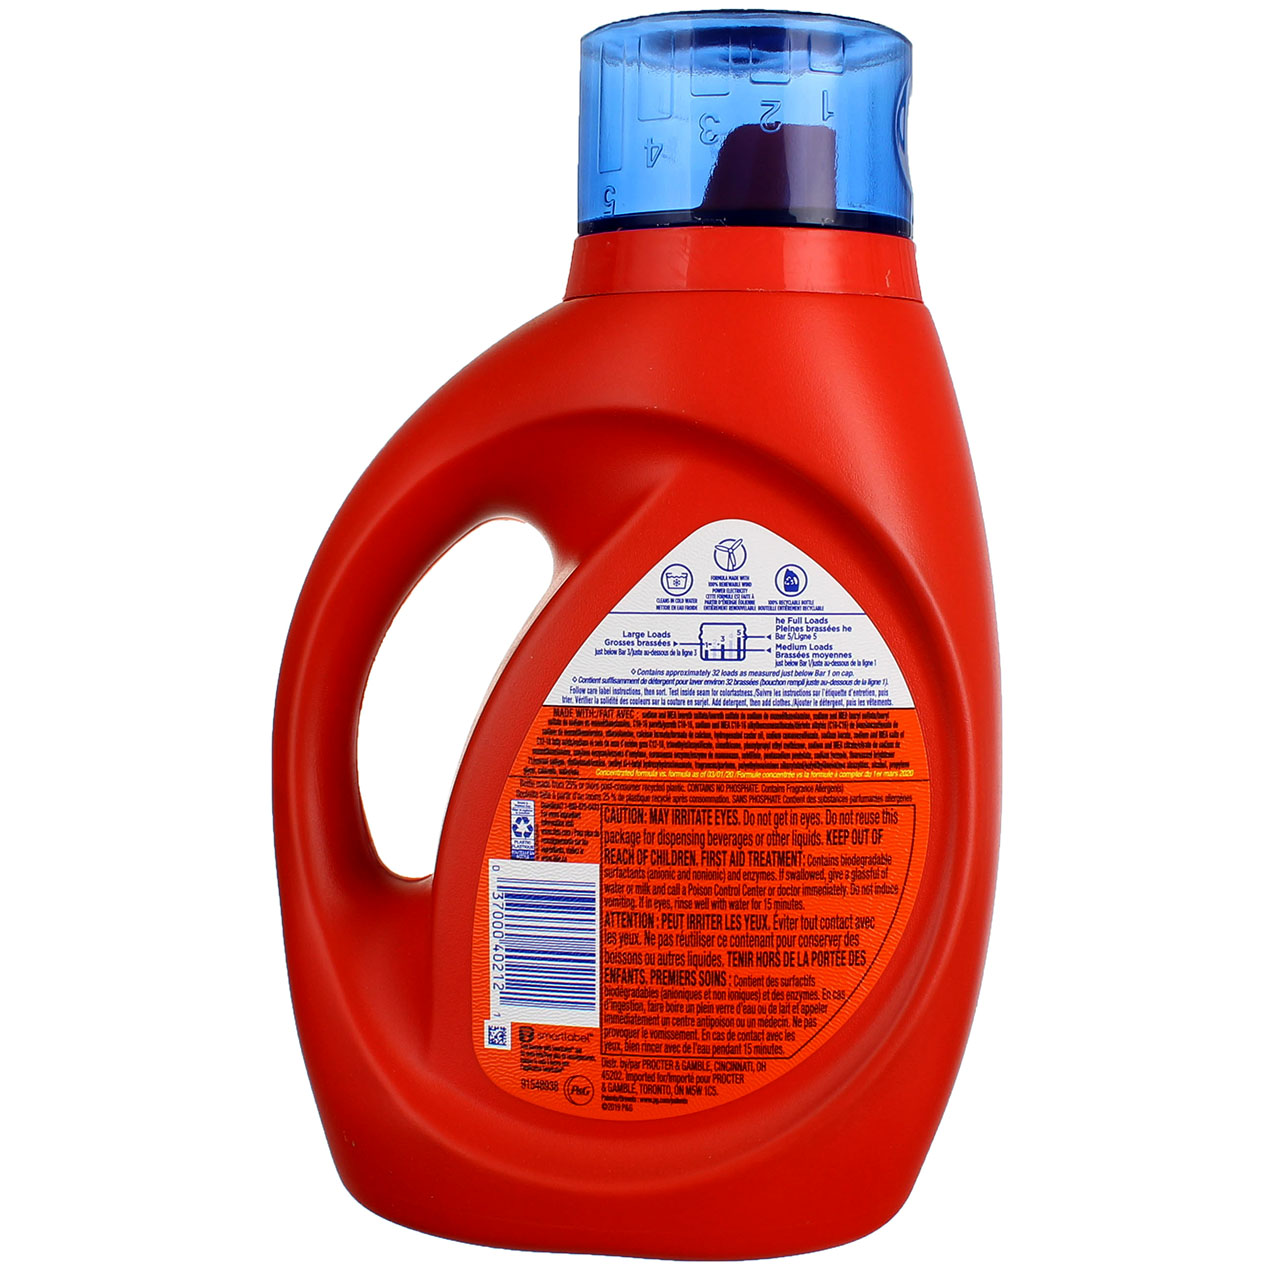 Tide High Efficiency Turbo Clean Laundry Detergent Liquid, 46 fl oz - image 2 of 2